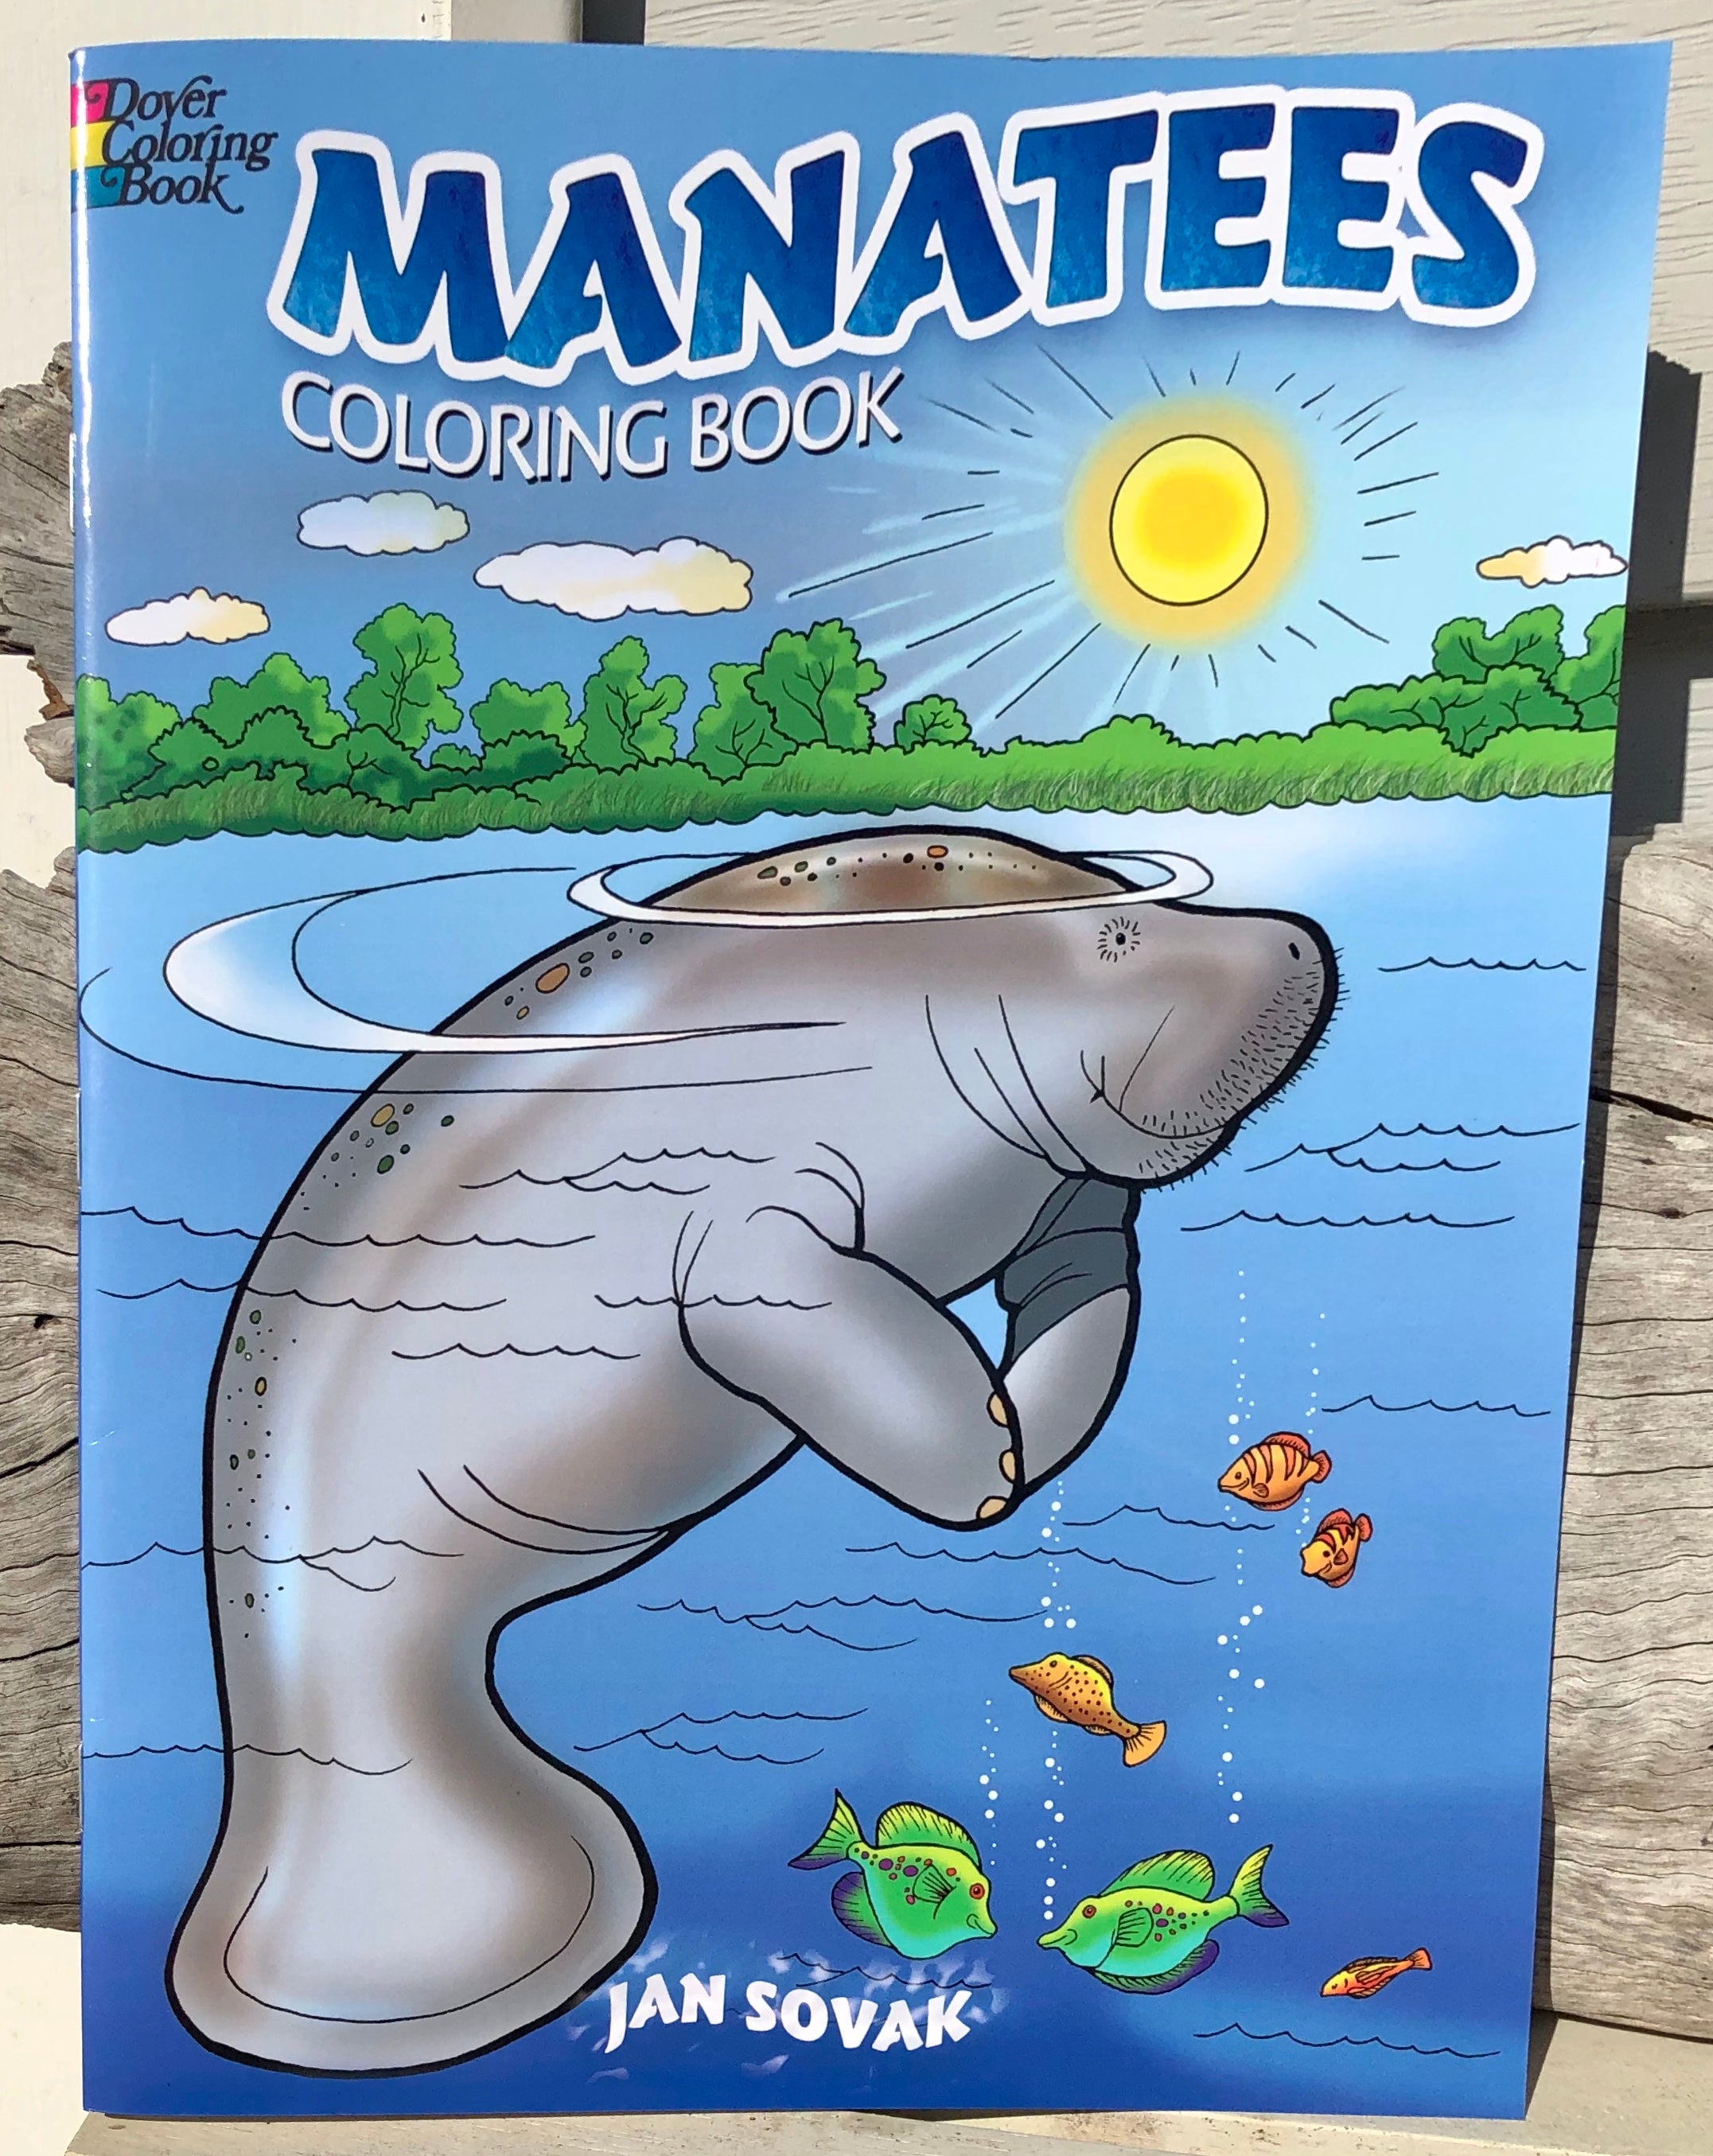 Manatees coloring book